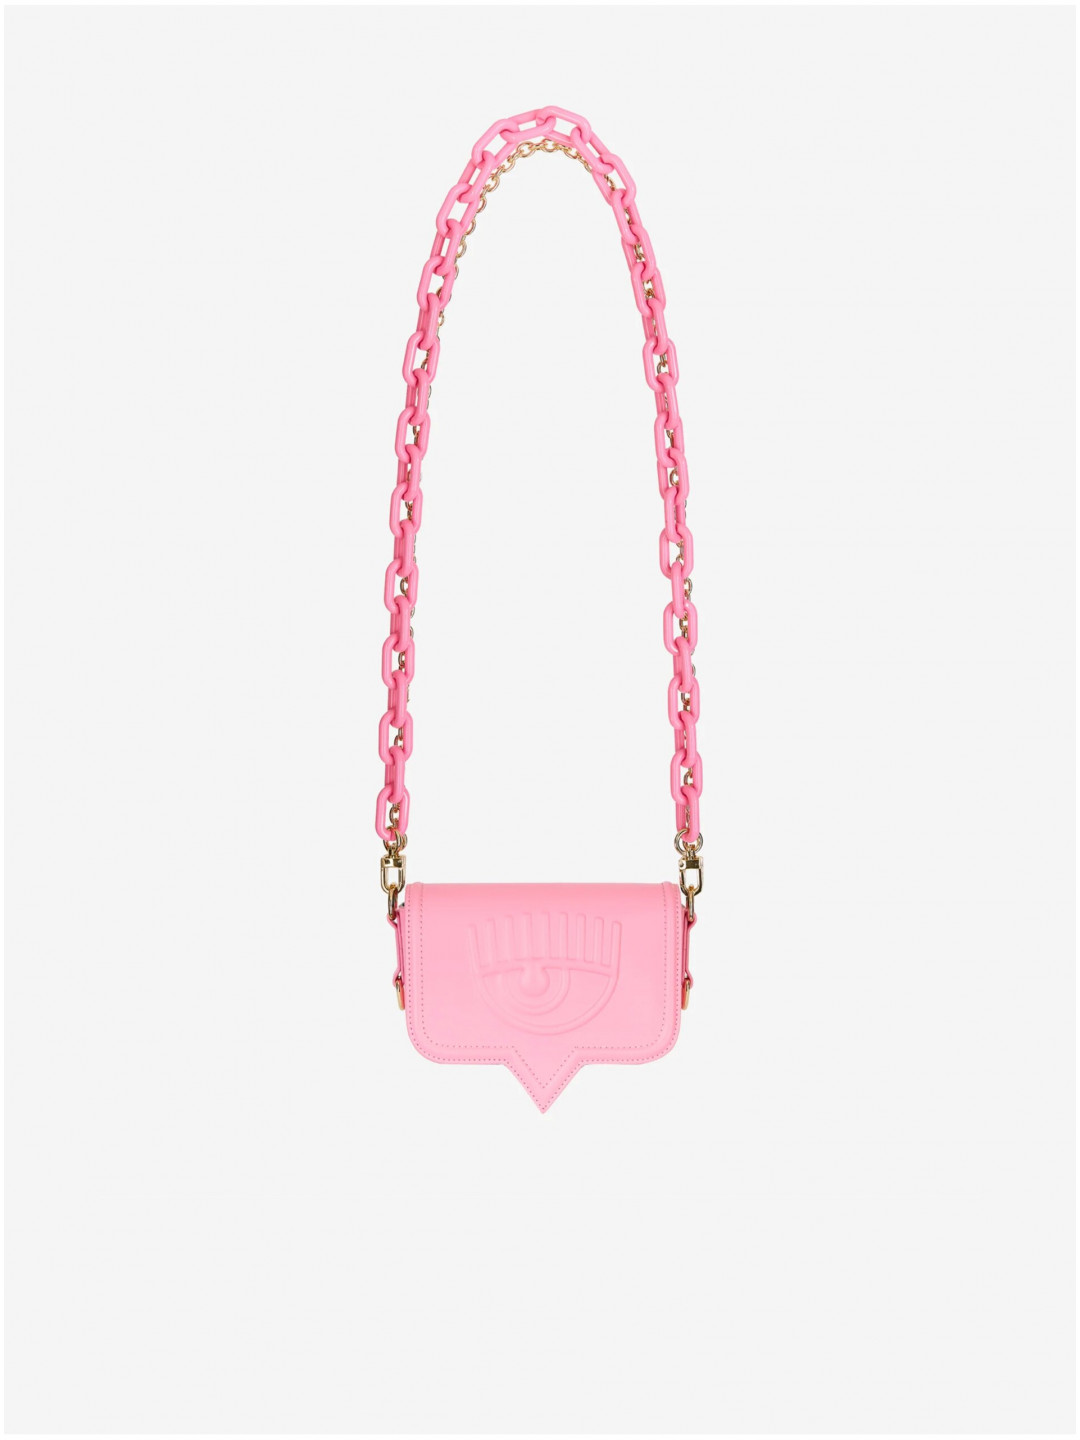 Růžová dámská kabelka CHIARA FERRAGNI Eyelike Bags